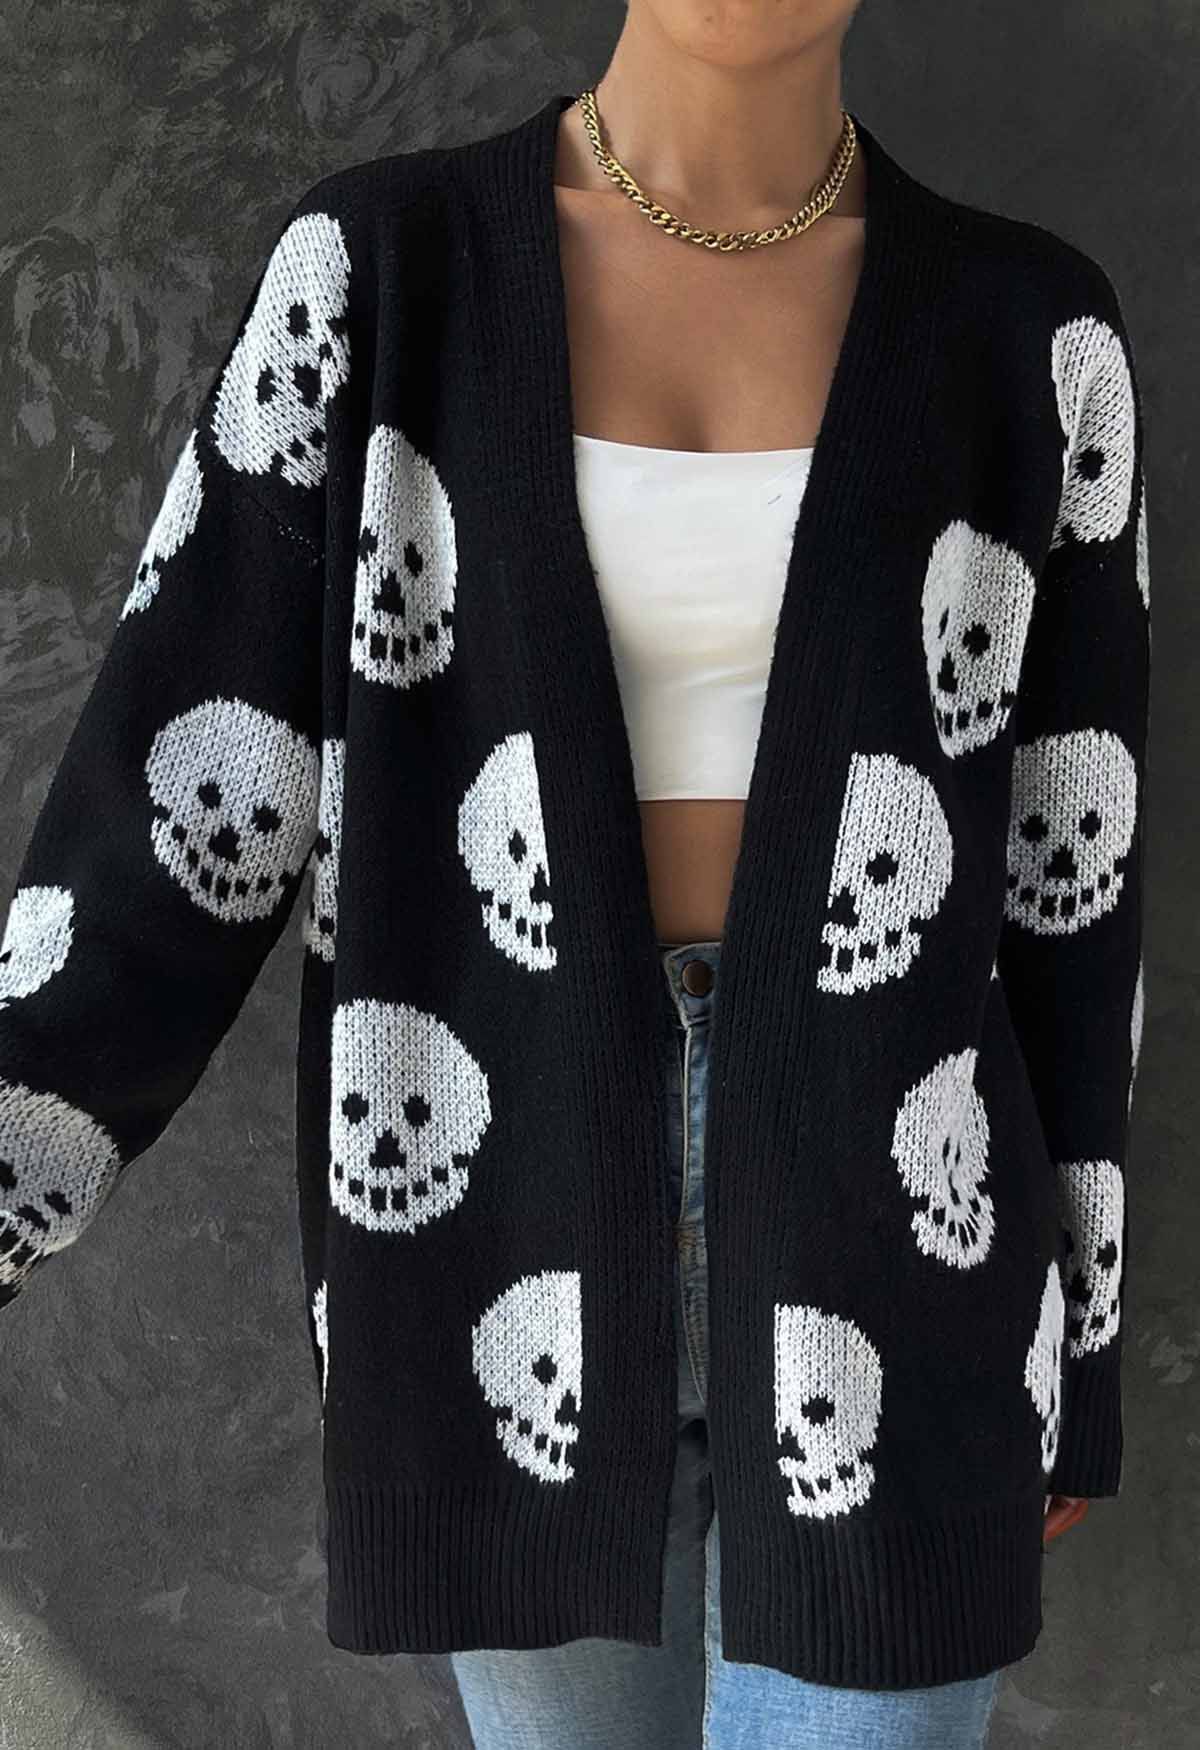 Halloween Skull Jacquard Longline Knit Cardigan